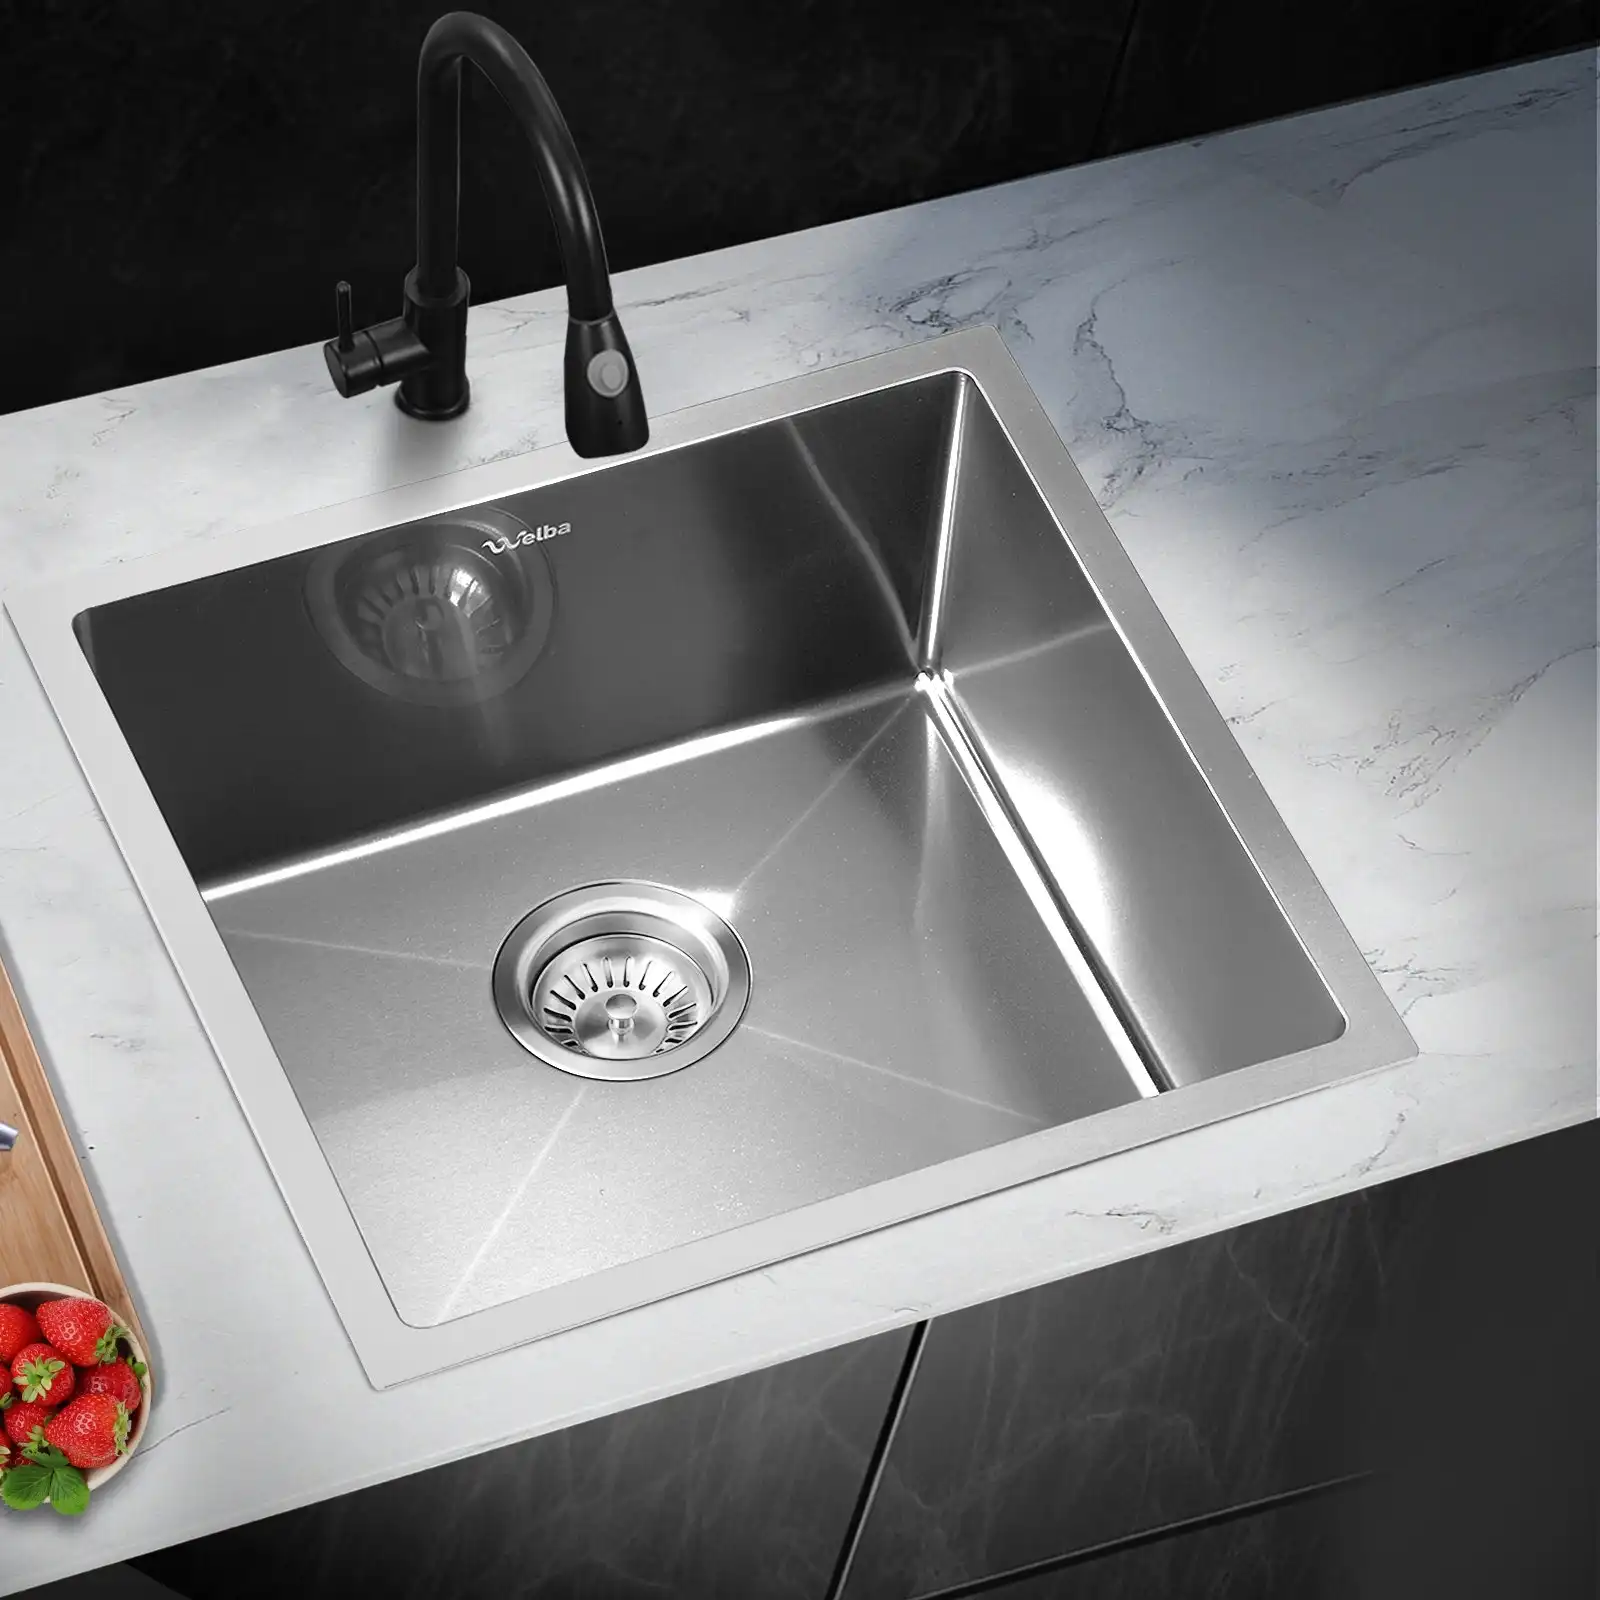 Welba Kitchen Sink Stainless Steel Bathroom Laundry Basin Single Silver 44X44CM